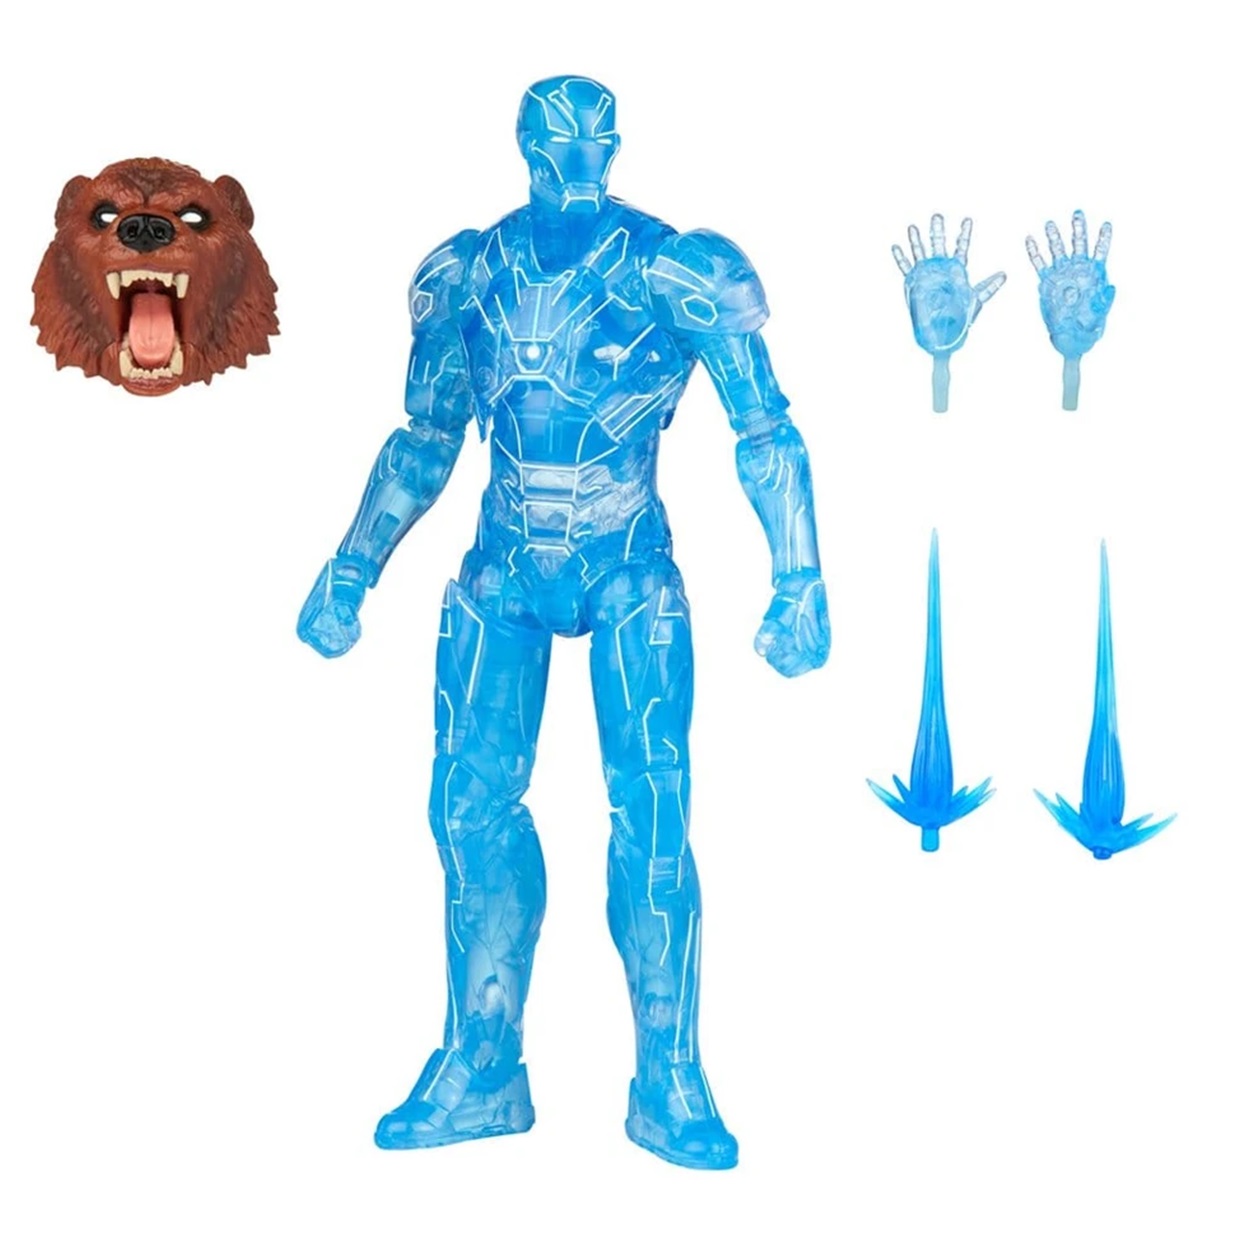 Hologram Iron Man Figura Marvel B A F Ursa Major Legends